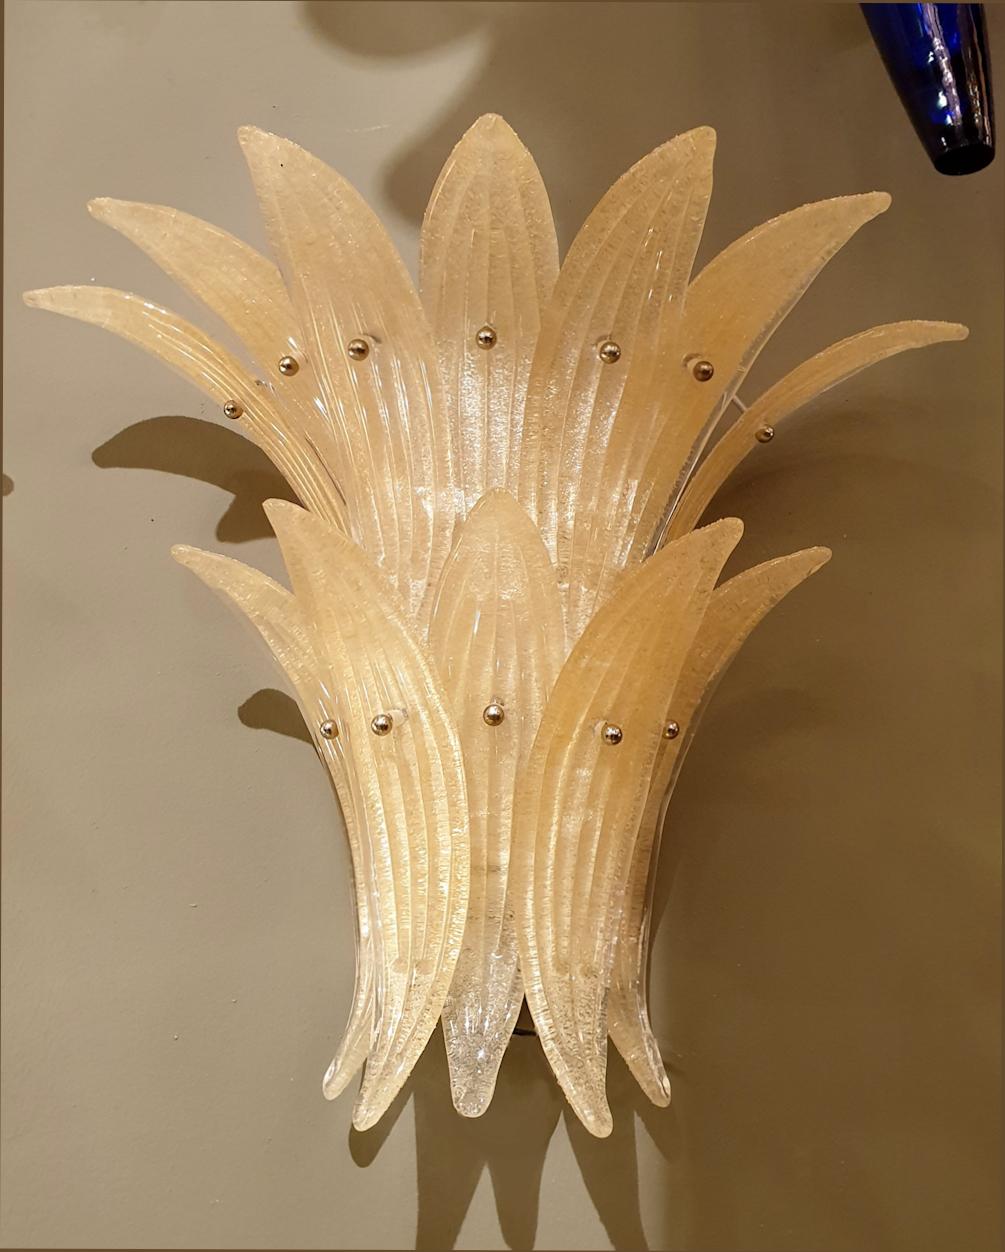 Italian Pair of Mid-Century Modern Beige Murano Glass Pineapple Sconces, by Venini 1970s